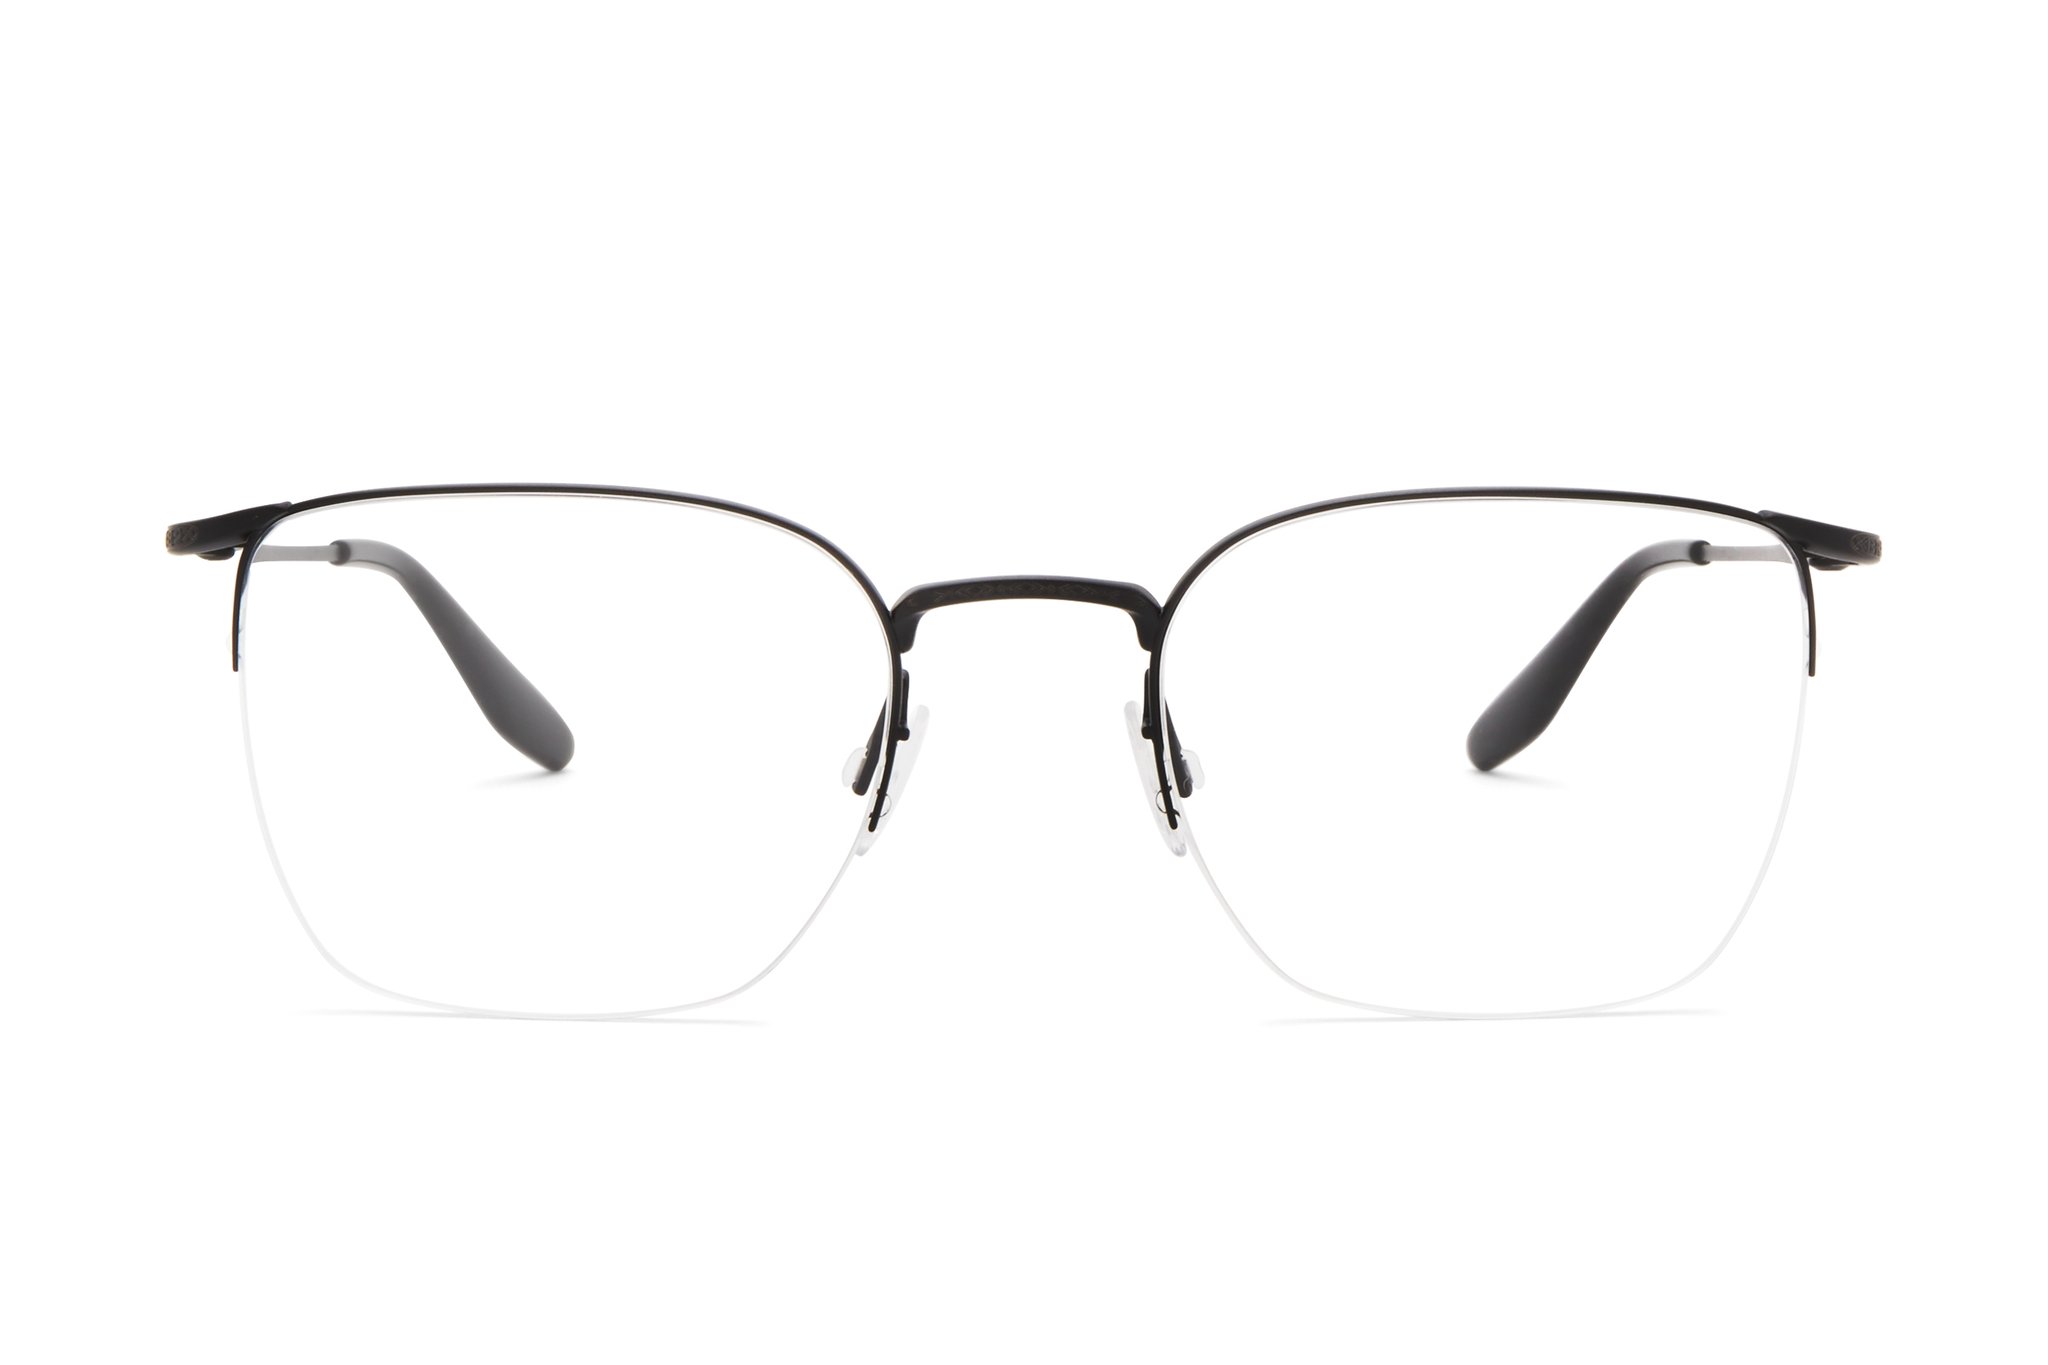 Barton Perreira Eyeglasses, Sunglasses, and Eyewear | Optique of Denver